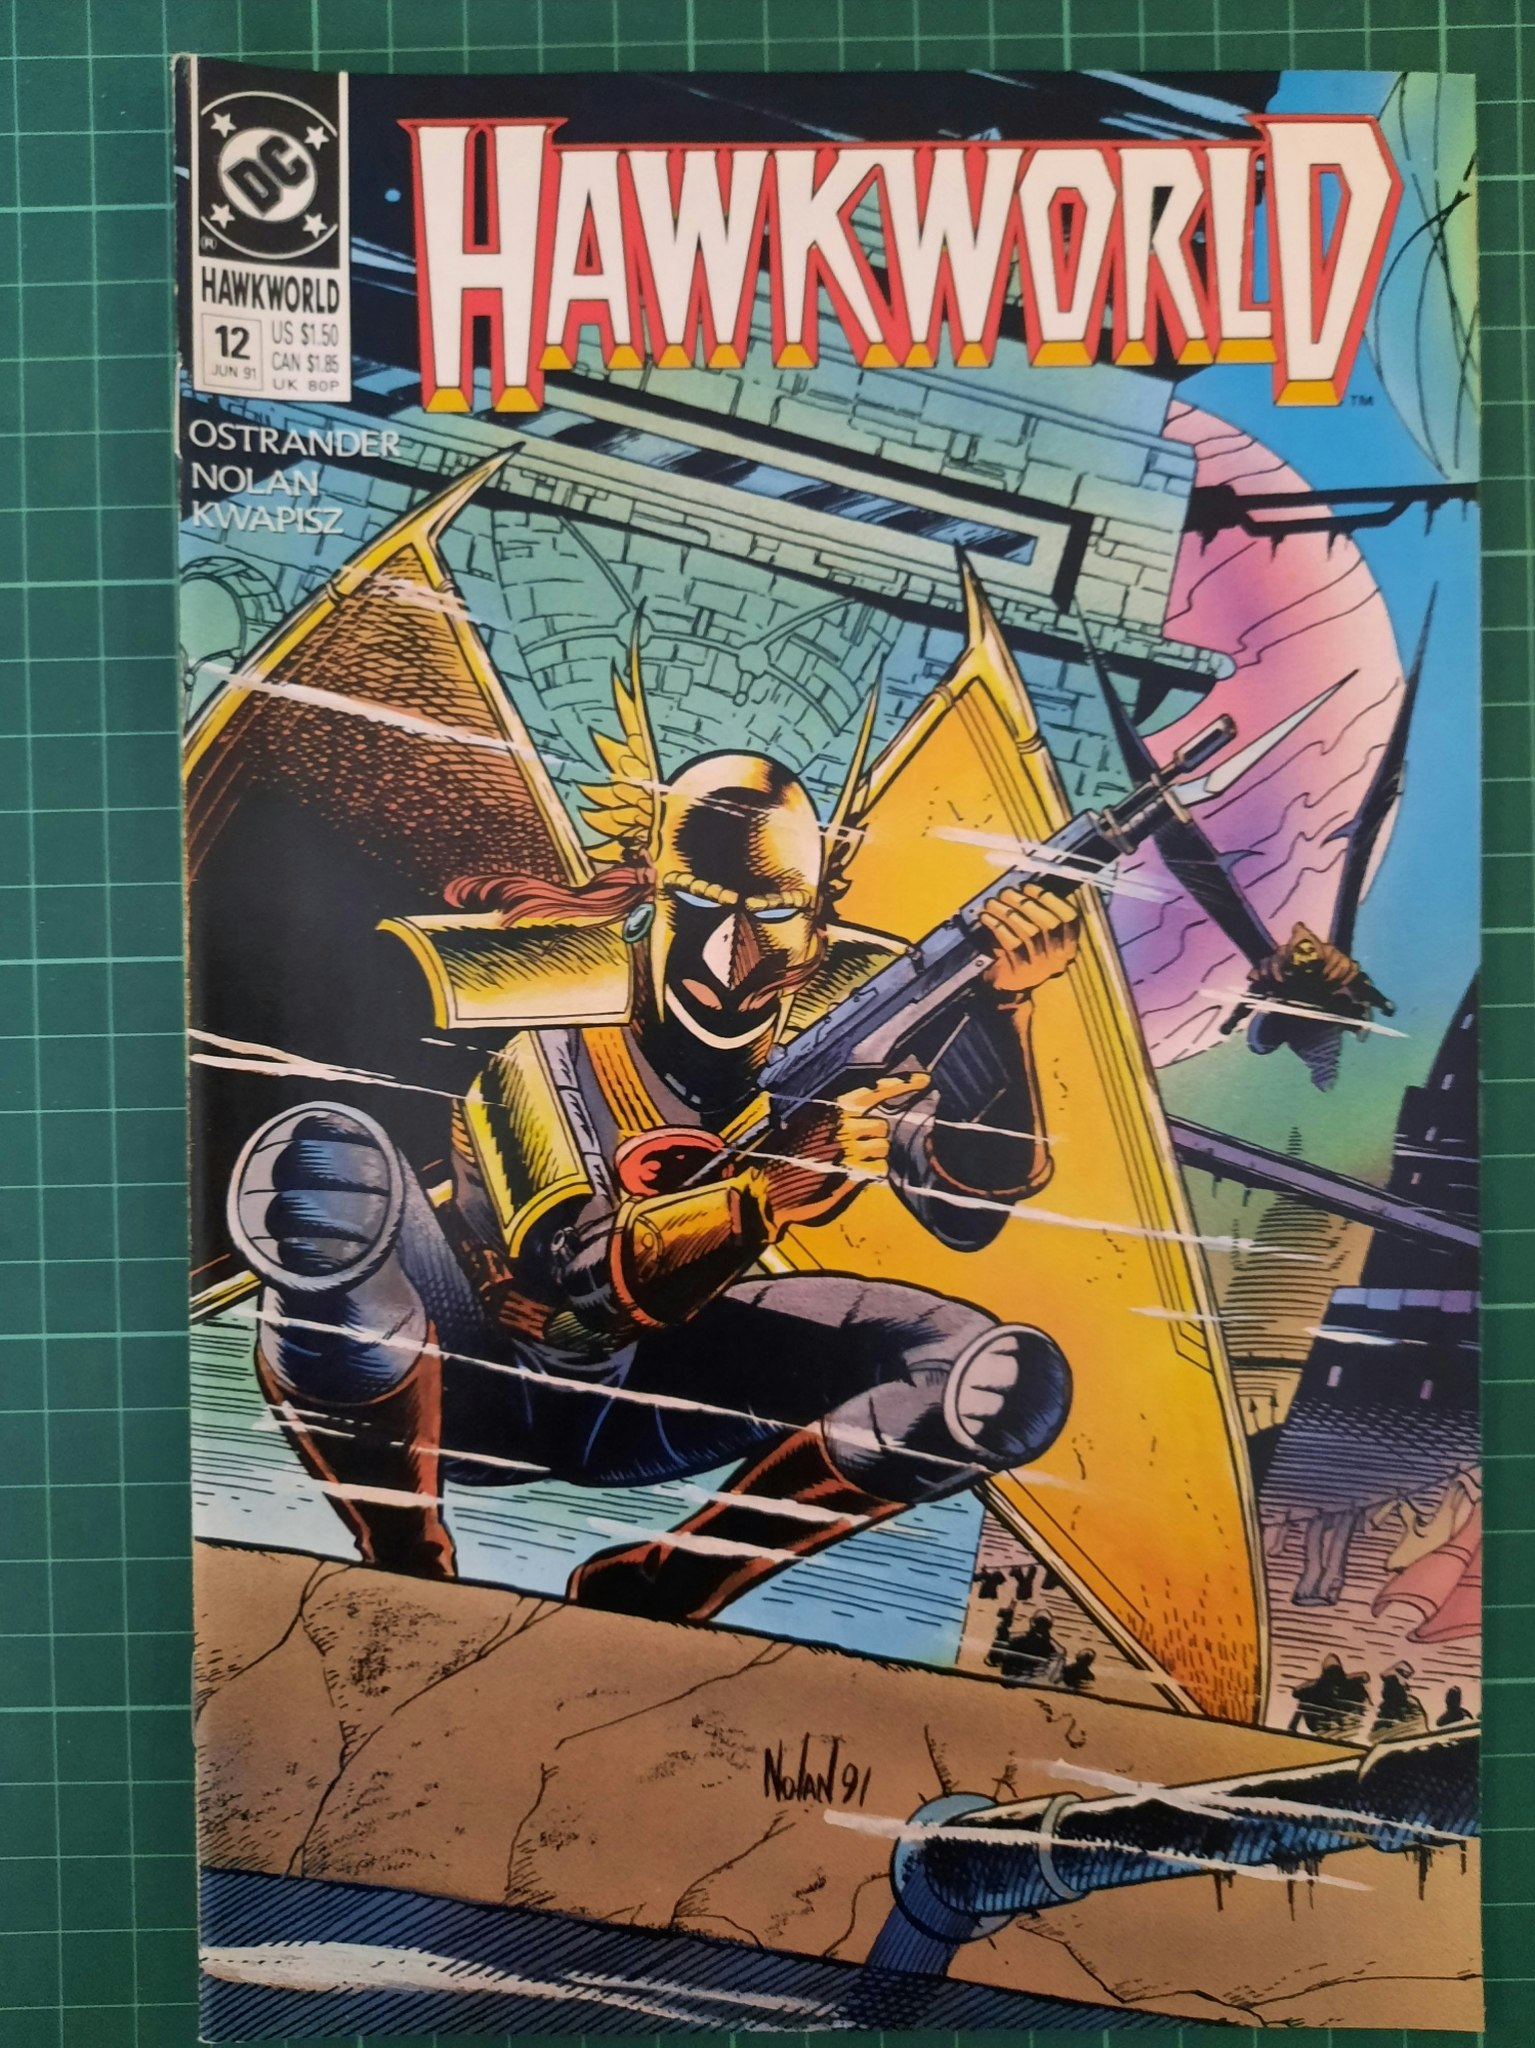 Hawkworld #12